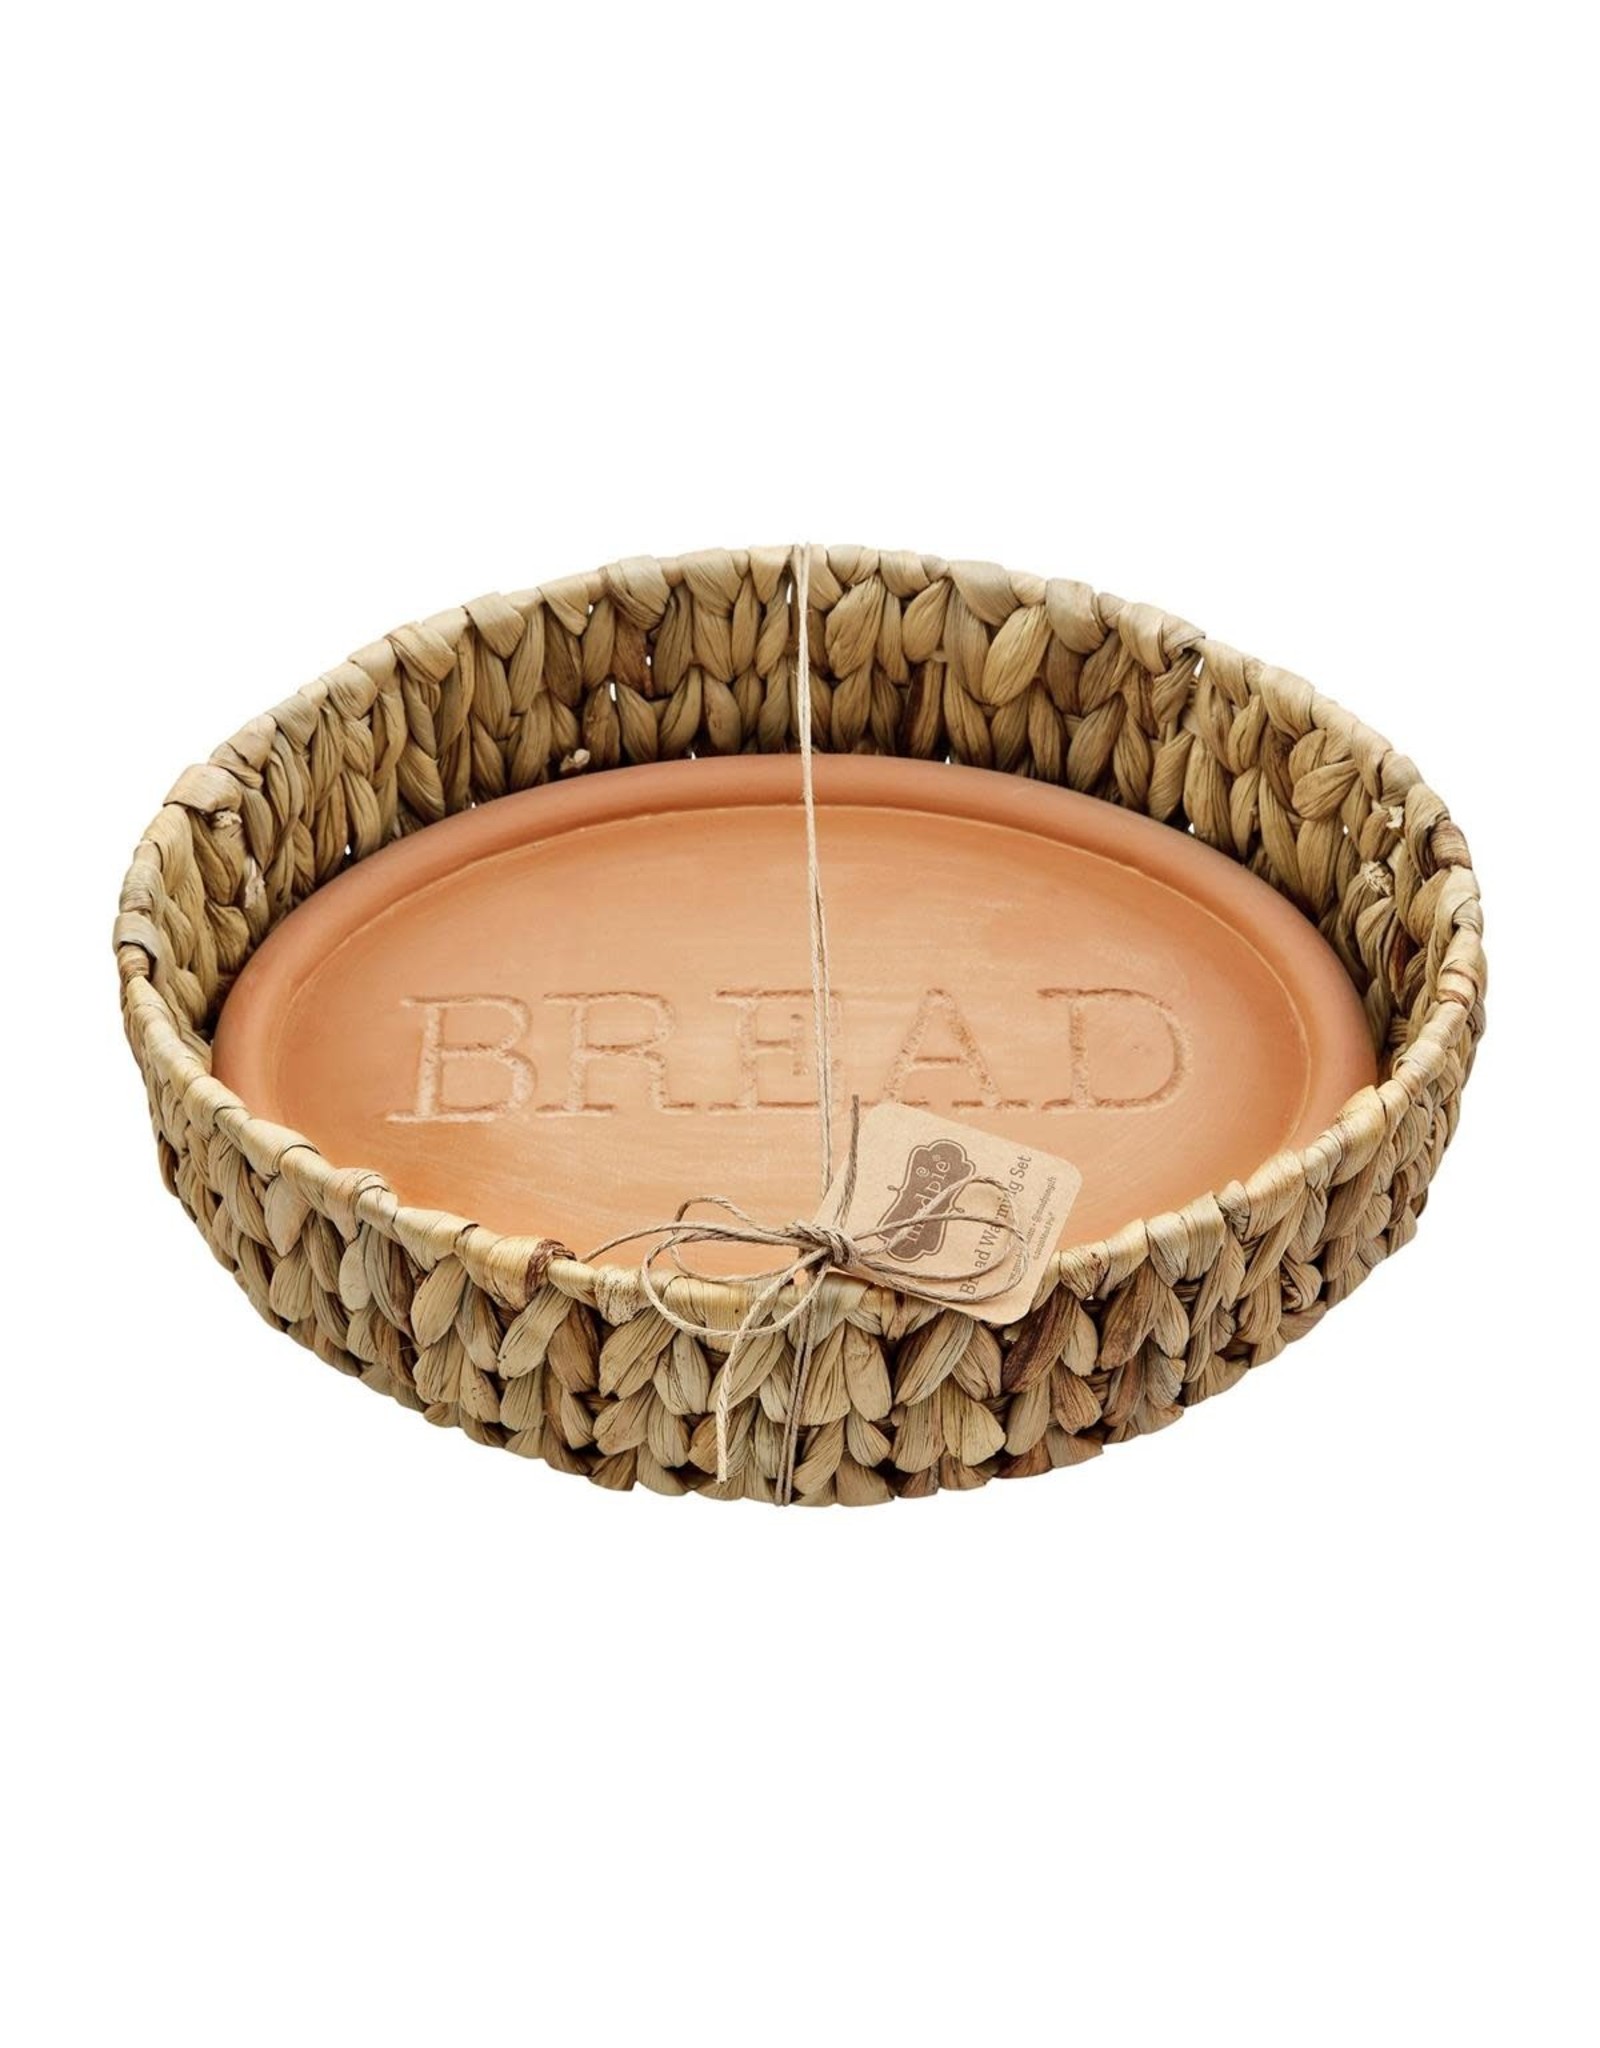 Mud Pie Bread Warming Set in Hyacinth Bread Basket